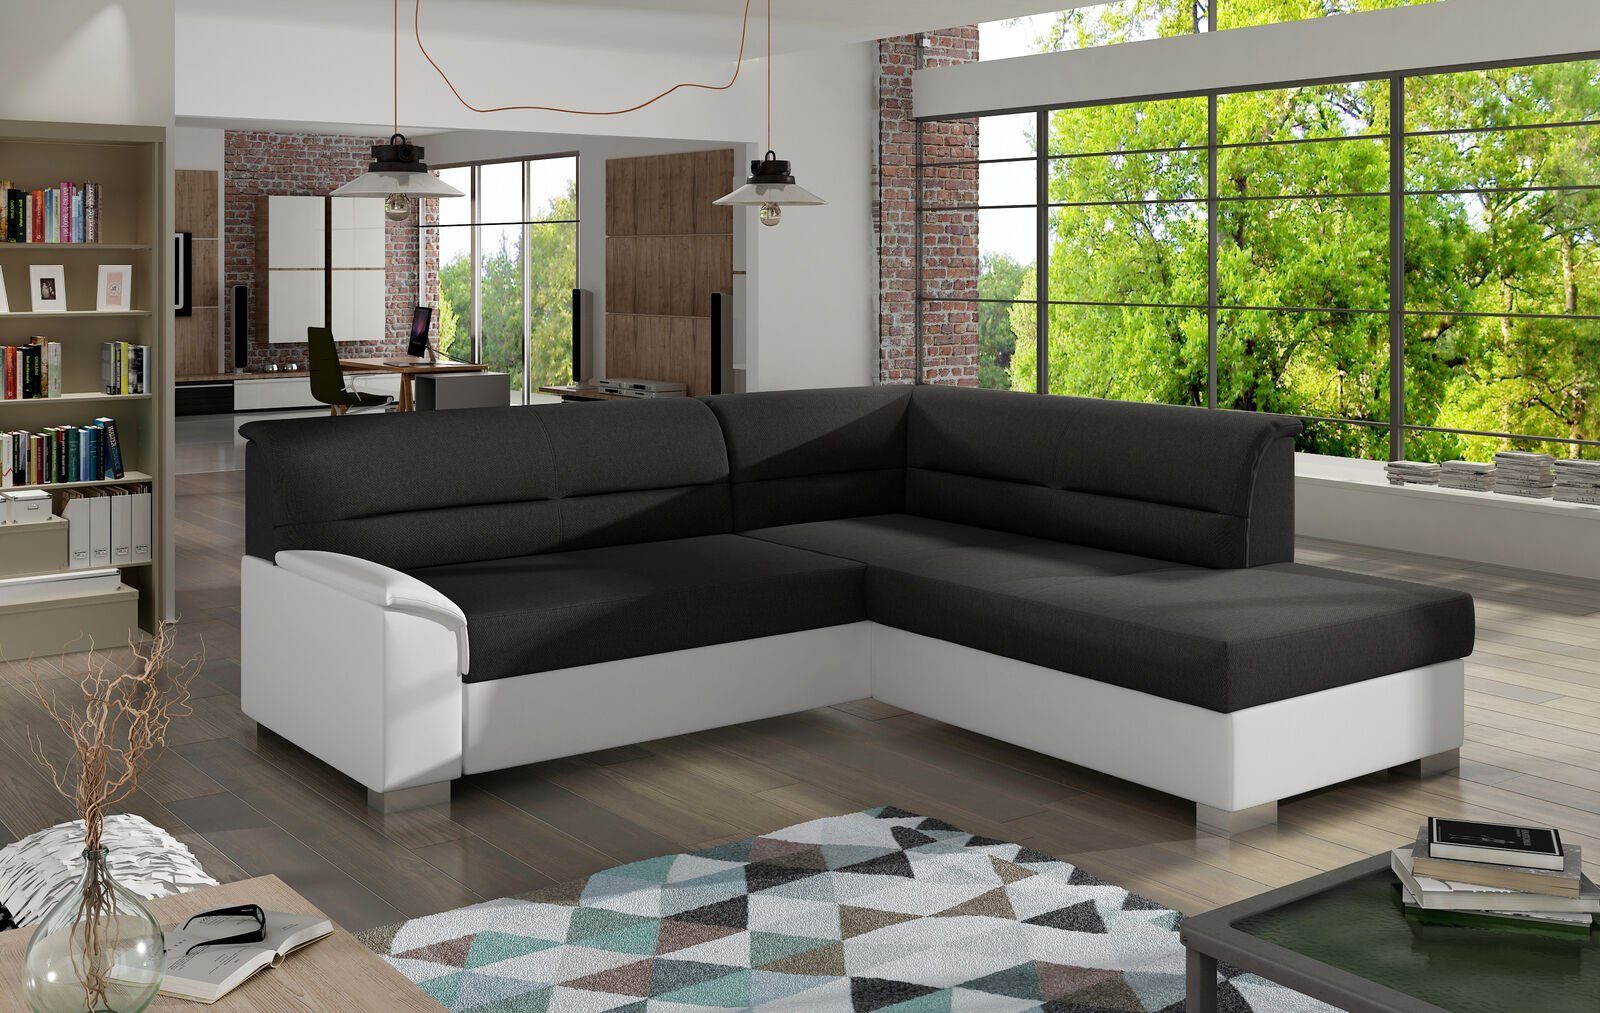 JVmoebel Ecksofa Design Ecksofa Schlafsofa Bettfunktion Couch Leder Textil Polster, Mit Bettfunktion Schwarz / Weiß